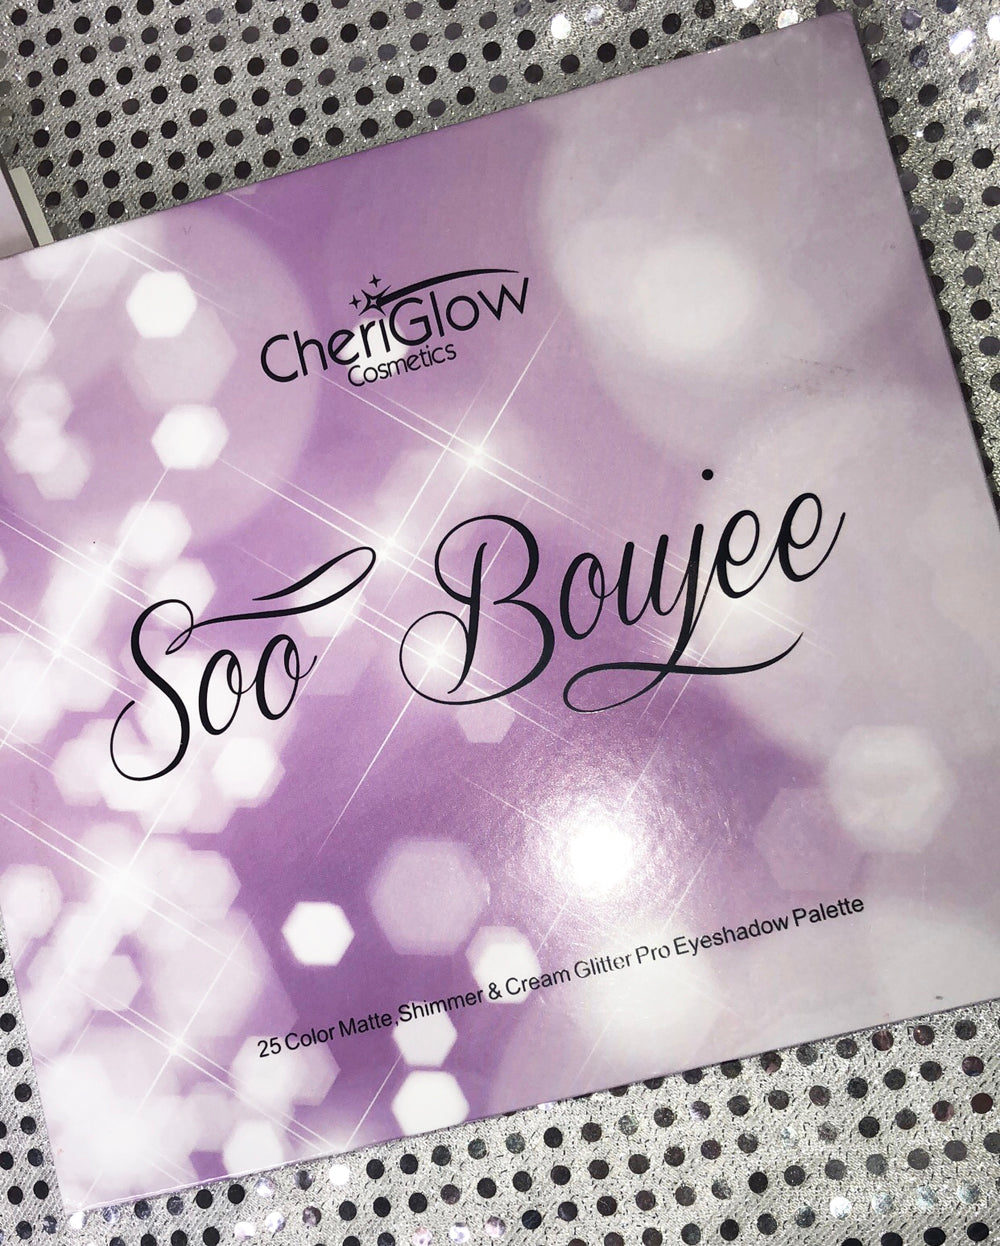 Soo Boujee 25 Color Matte, Shimmer & Cream Glitter Pro Eyeshadow Palette